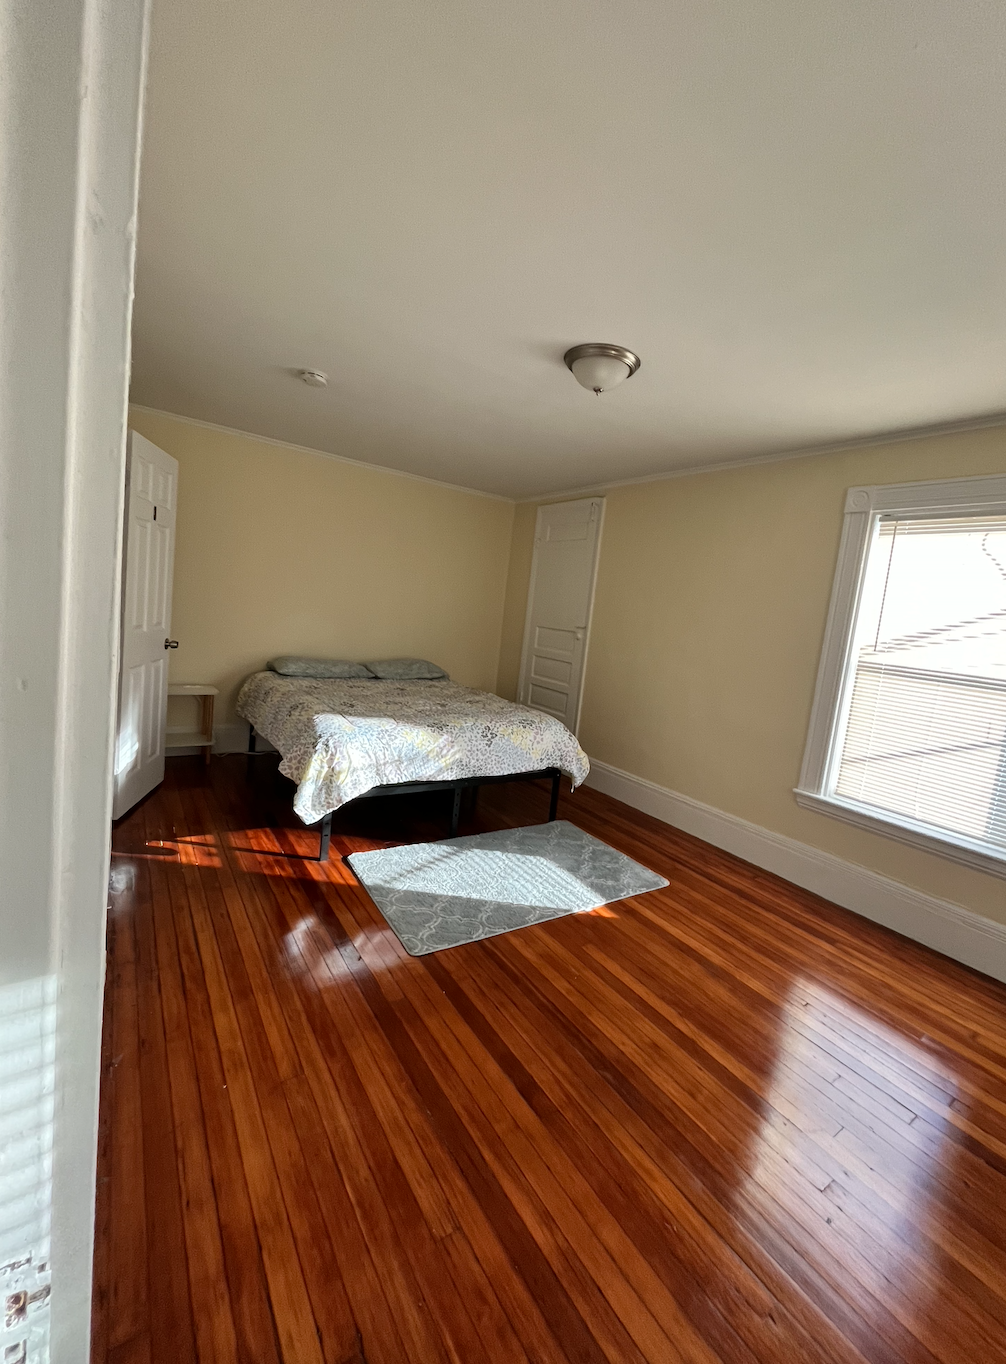 Photos of apartment on Hooker St.,Boston MA 02134